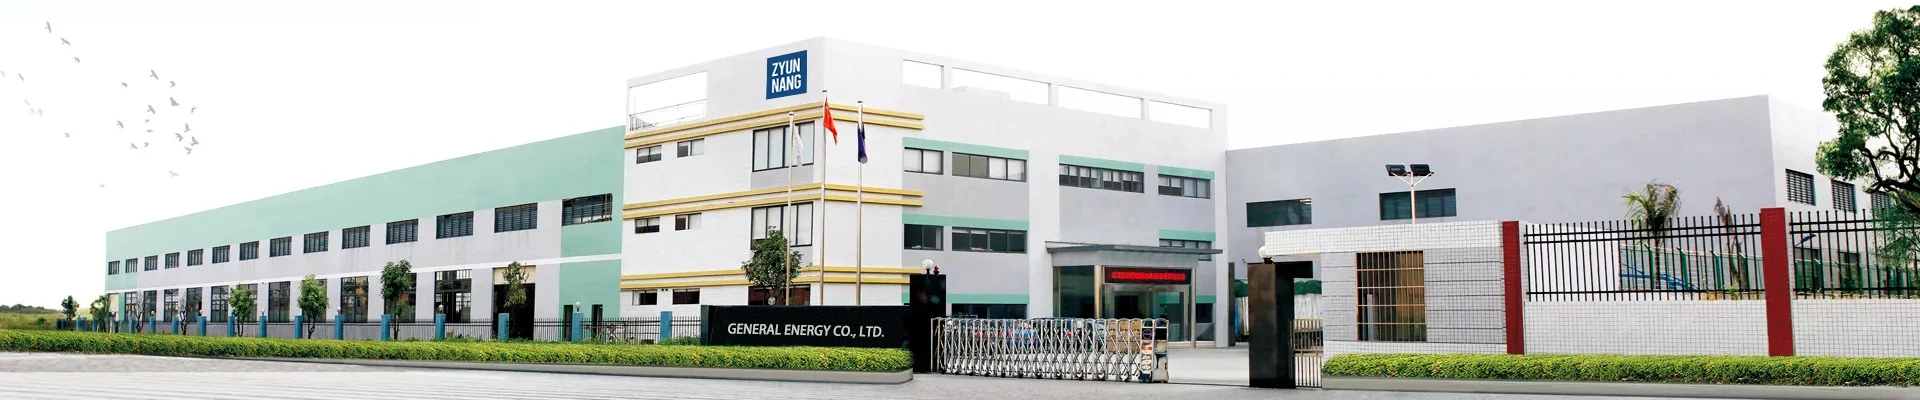 zyunnang heat pump general energy co ltd company